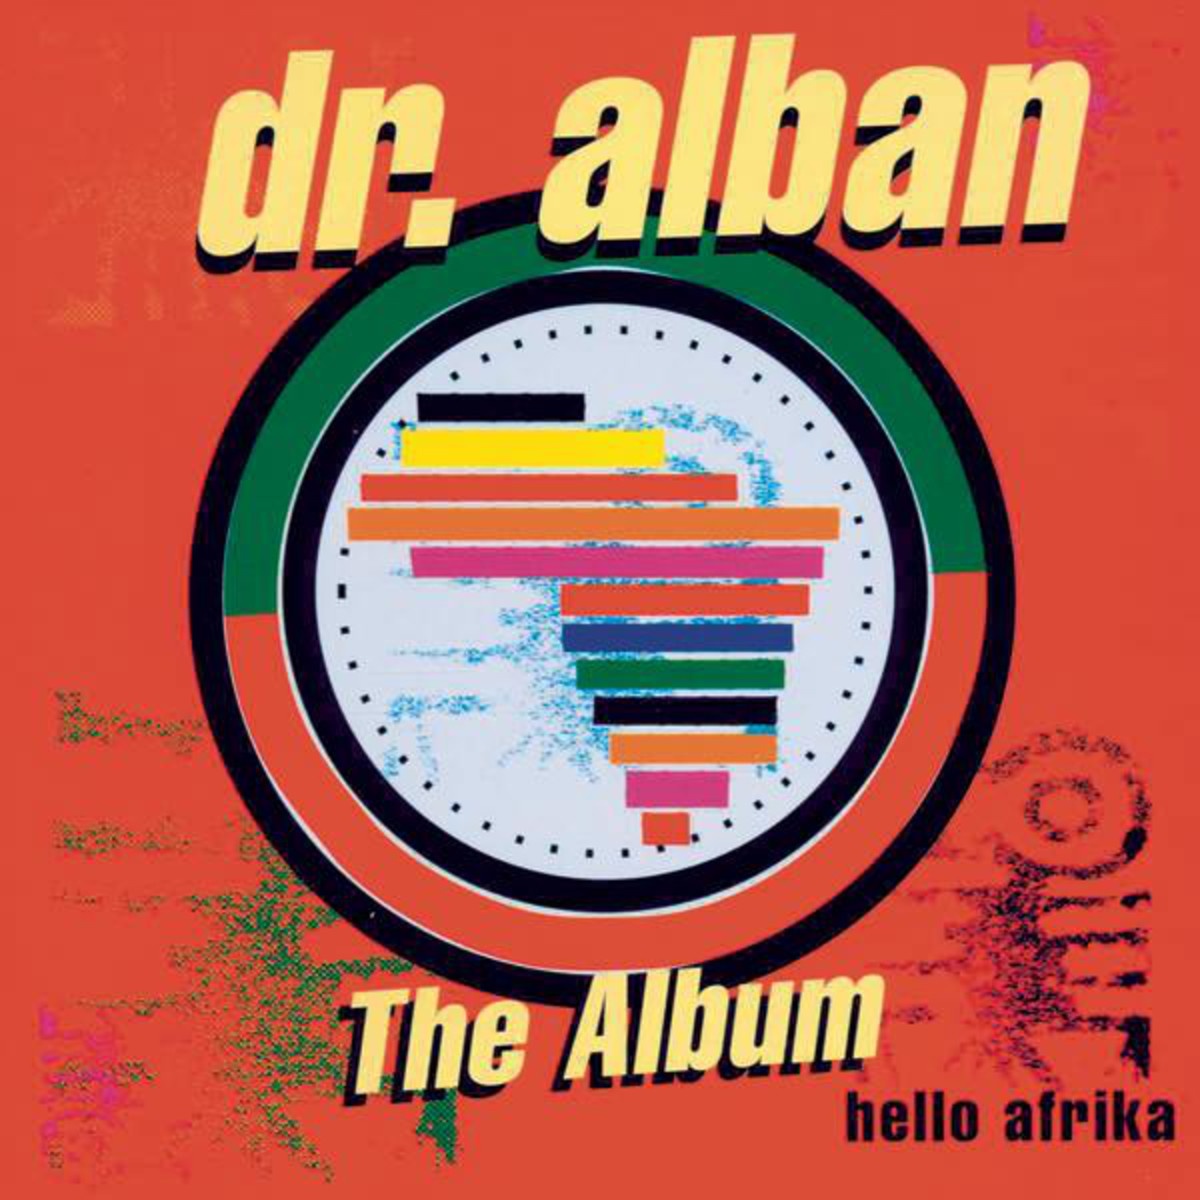 The Alban Prelude